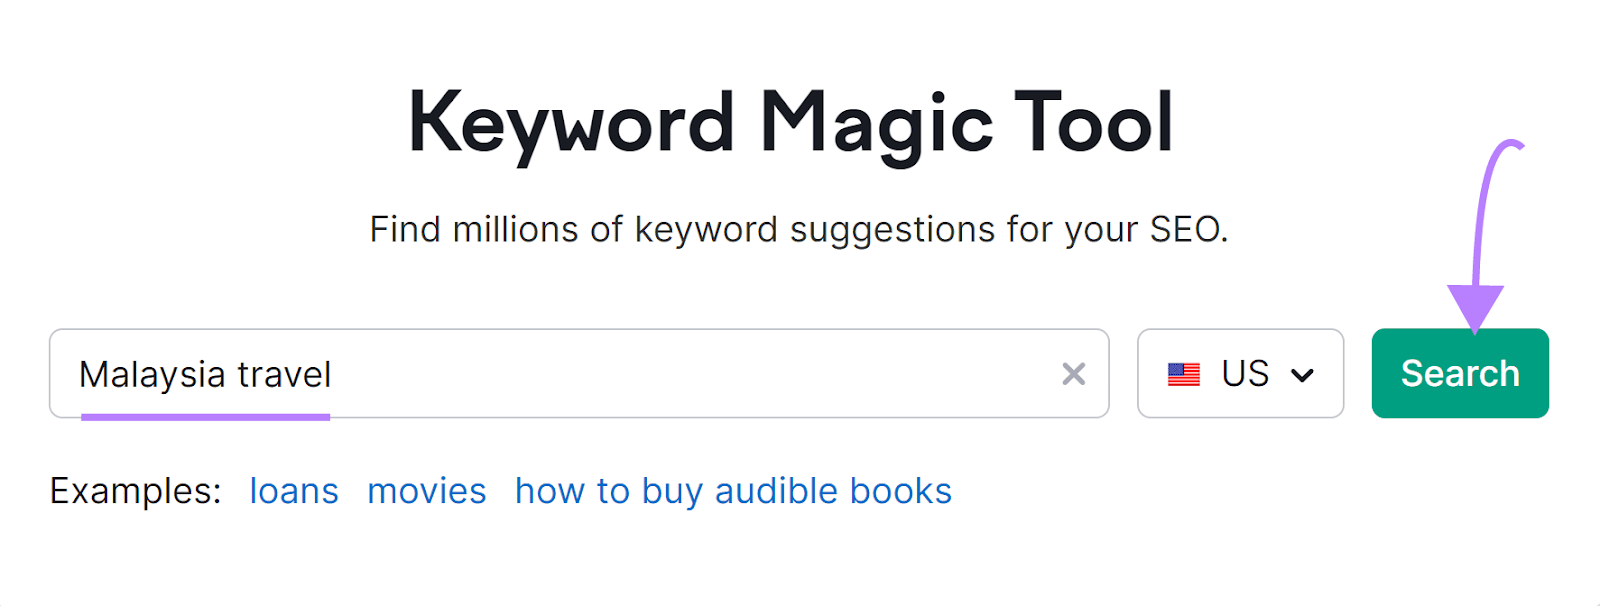 "Malaysia travel" keyword entered into the Keyword Magic Tool search bar